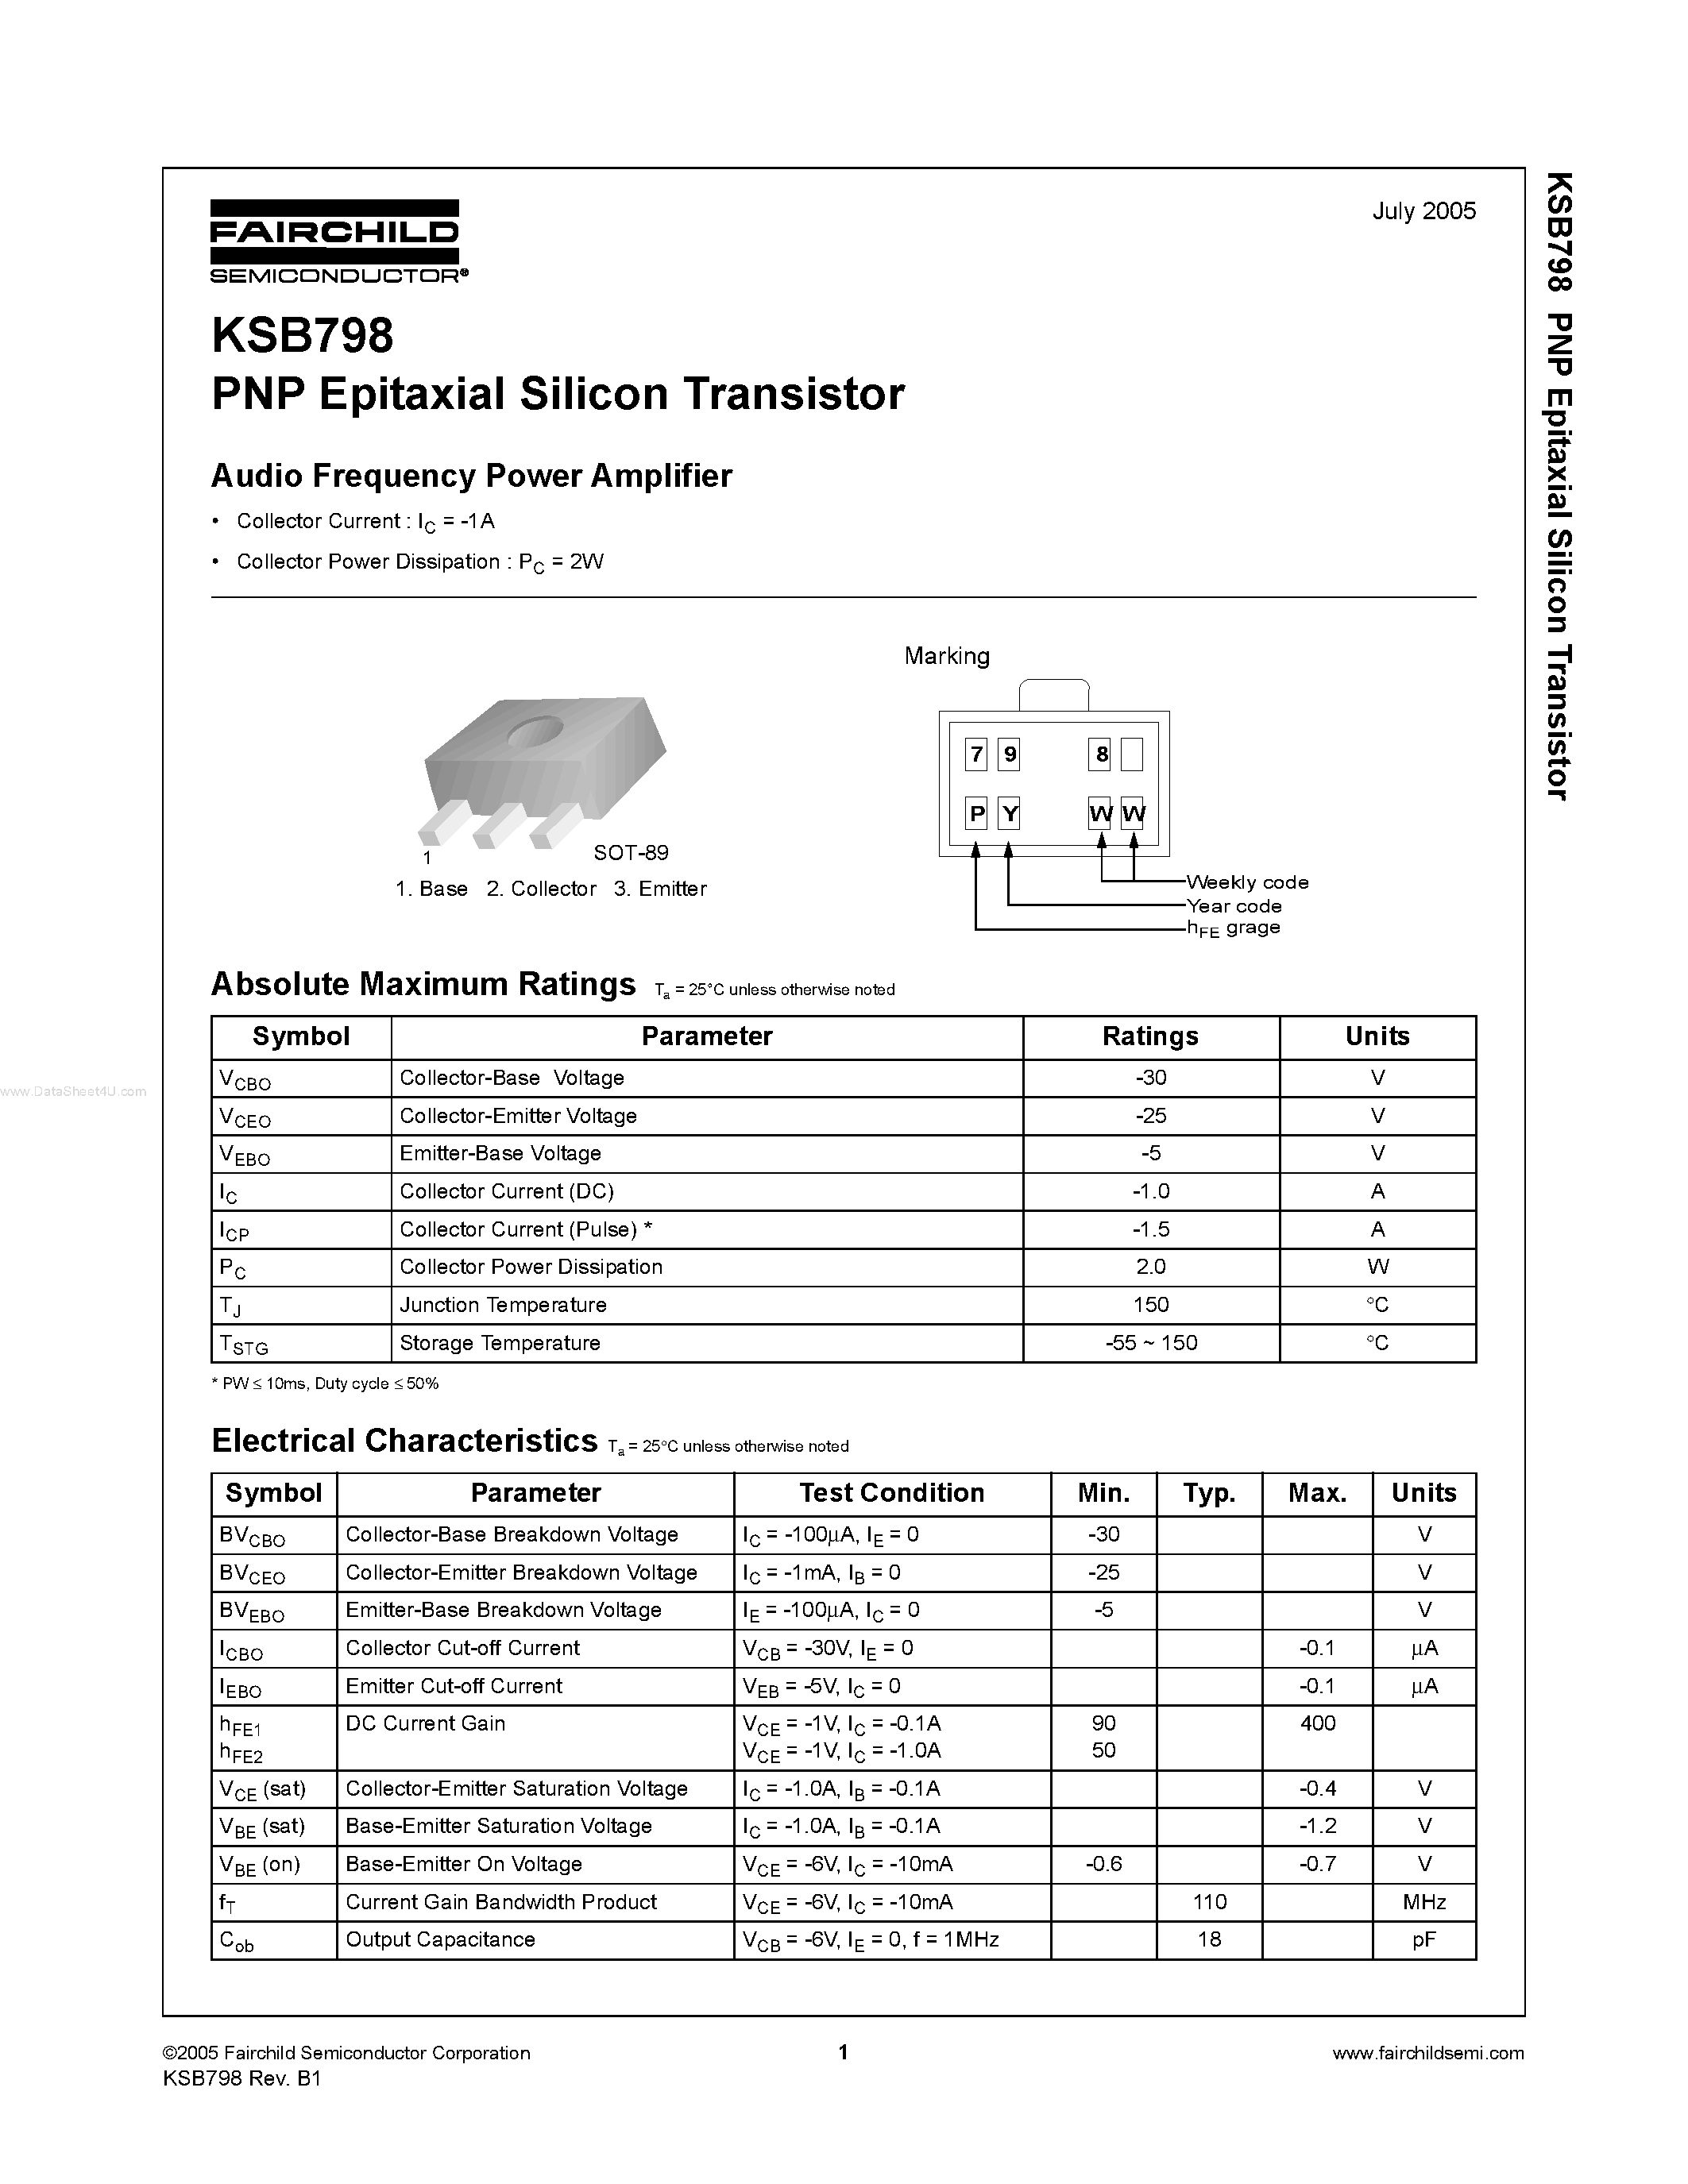 Datasheet KSB798 - PNP Epitaxial Silicon Transistor page 1